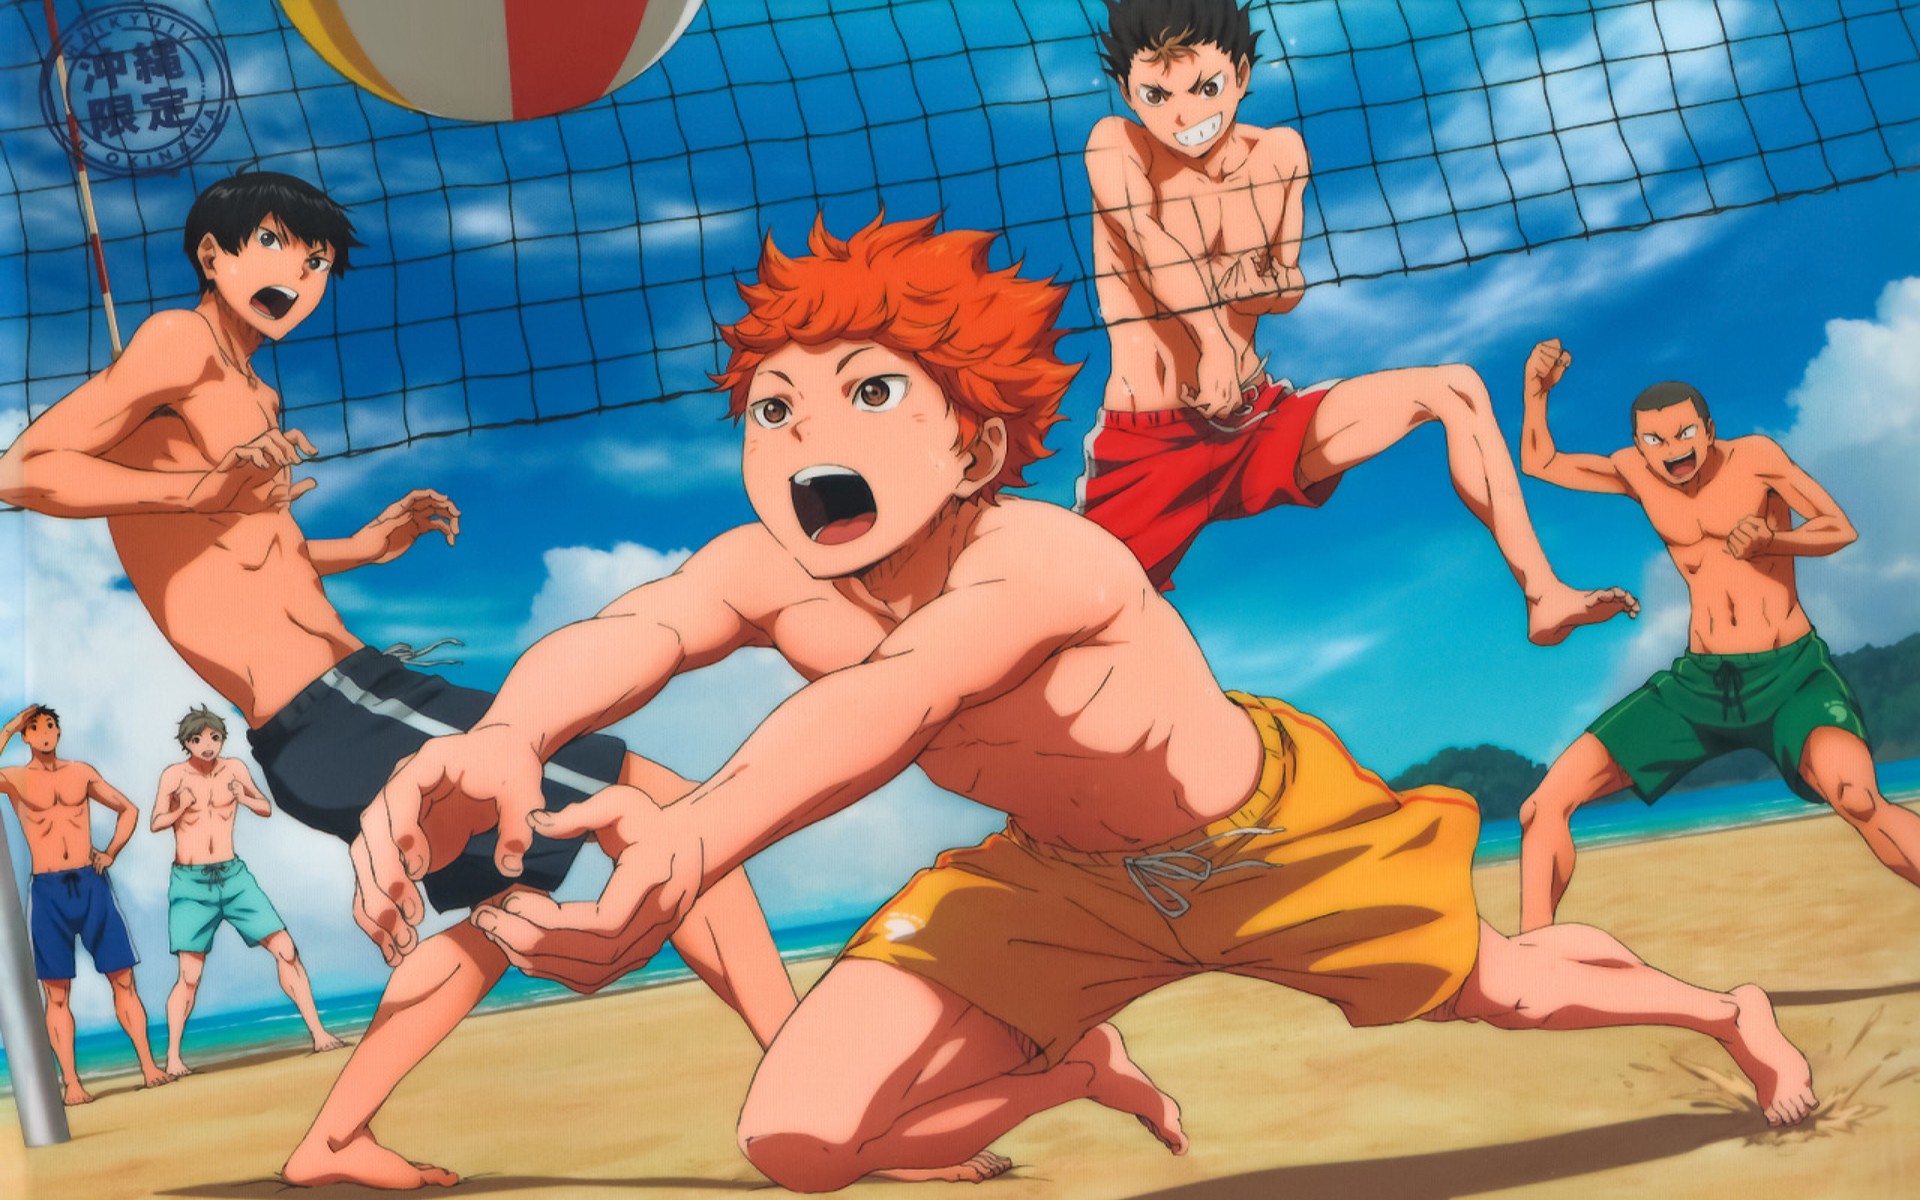 Anime 1920x1200 Haikyuu!! anime boys anime beach volleyball sport ball open mouth muscular group of men men outdoors